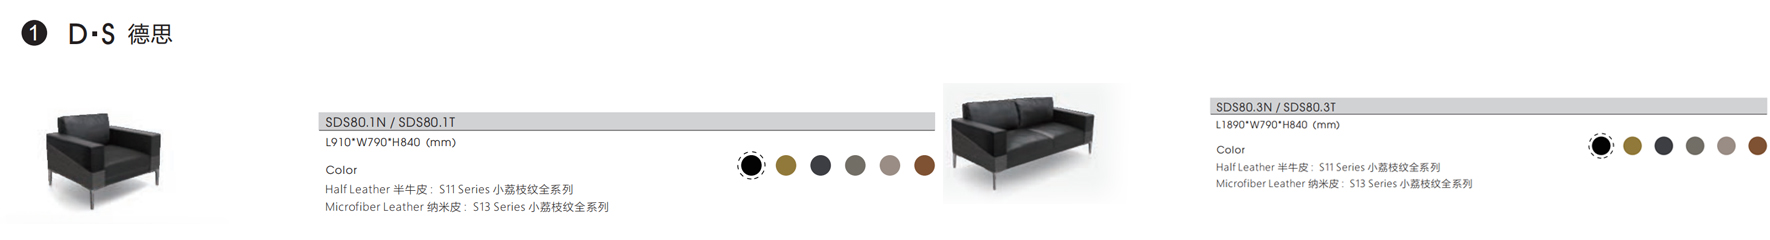 D·S德思系列拼接办公沙发尺寸颜色图